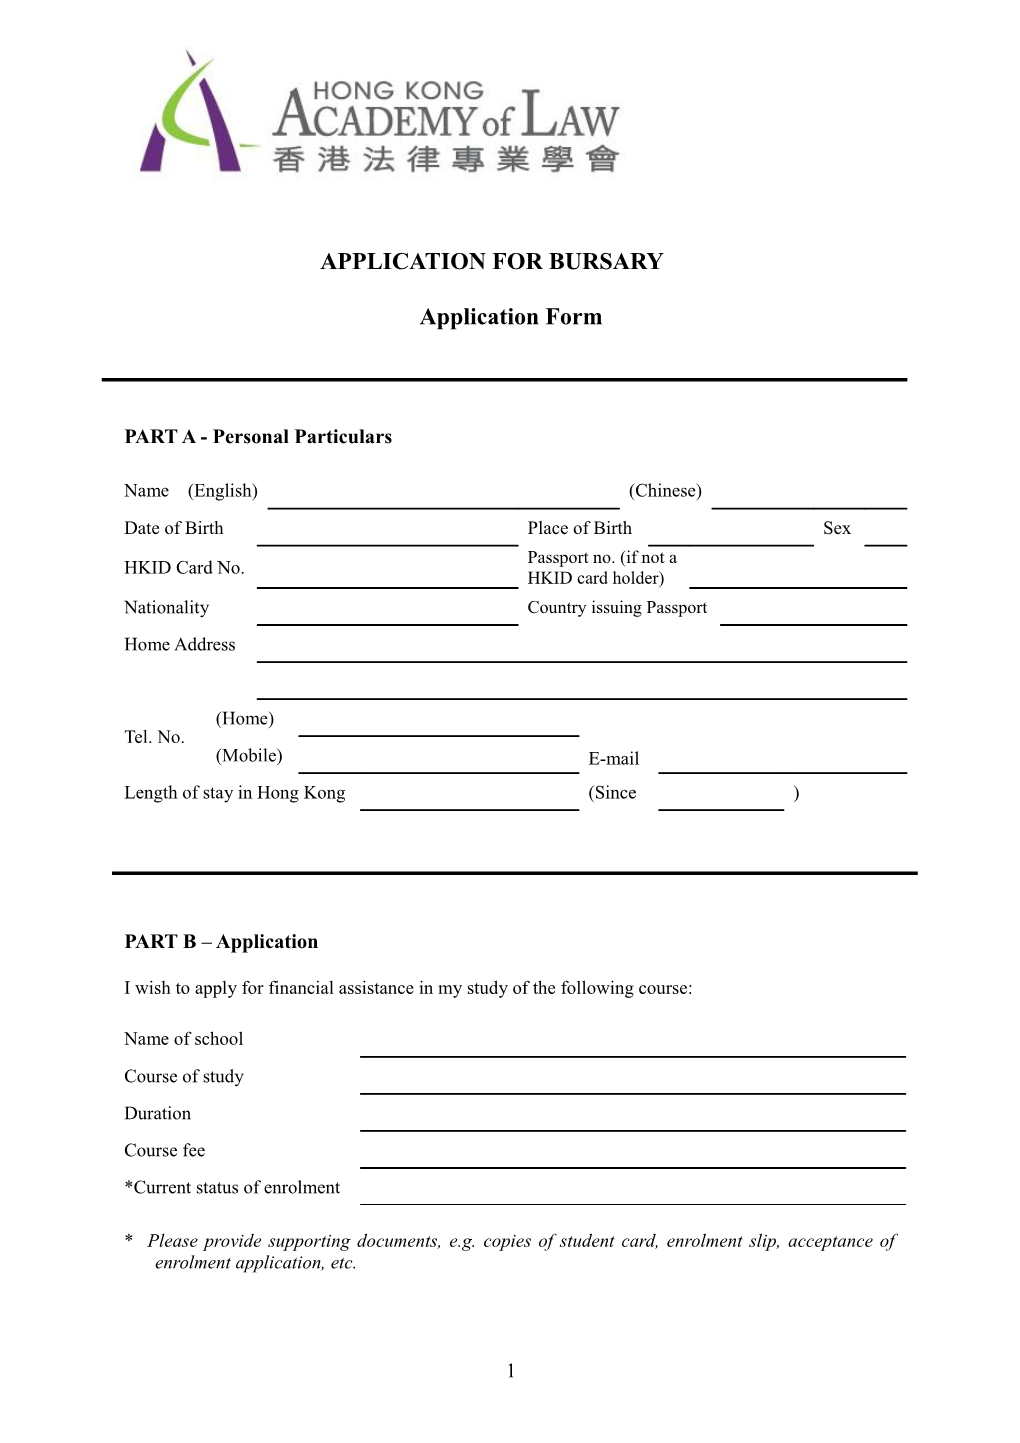 Application for Bursary